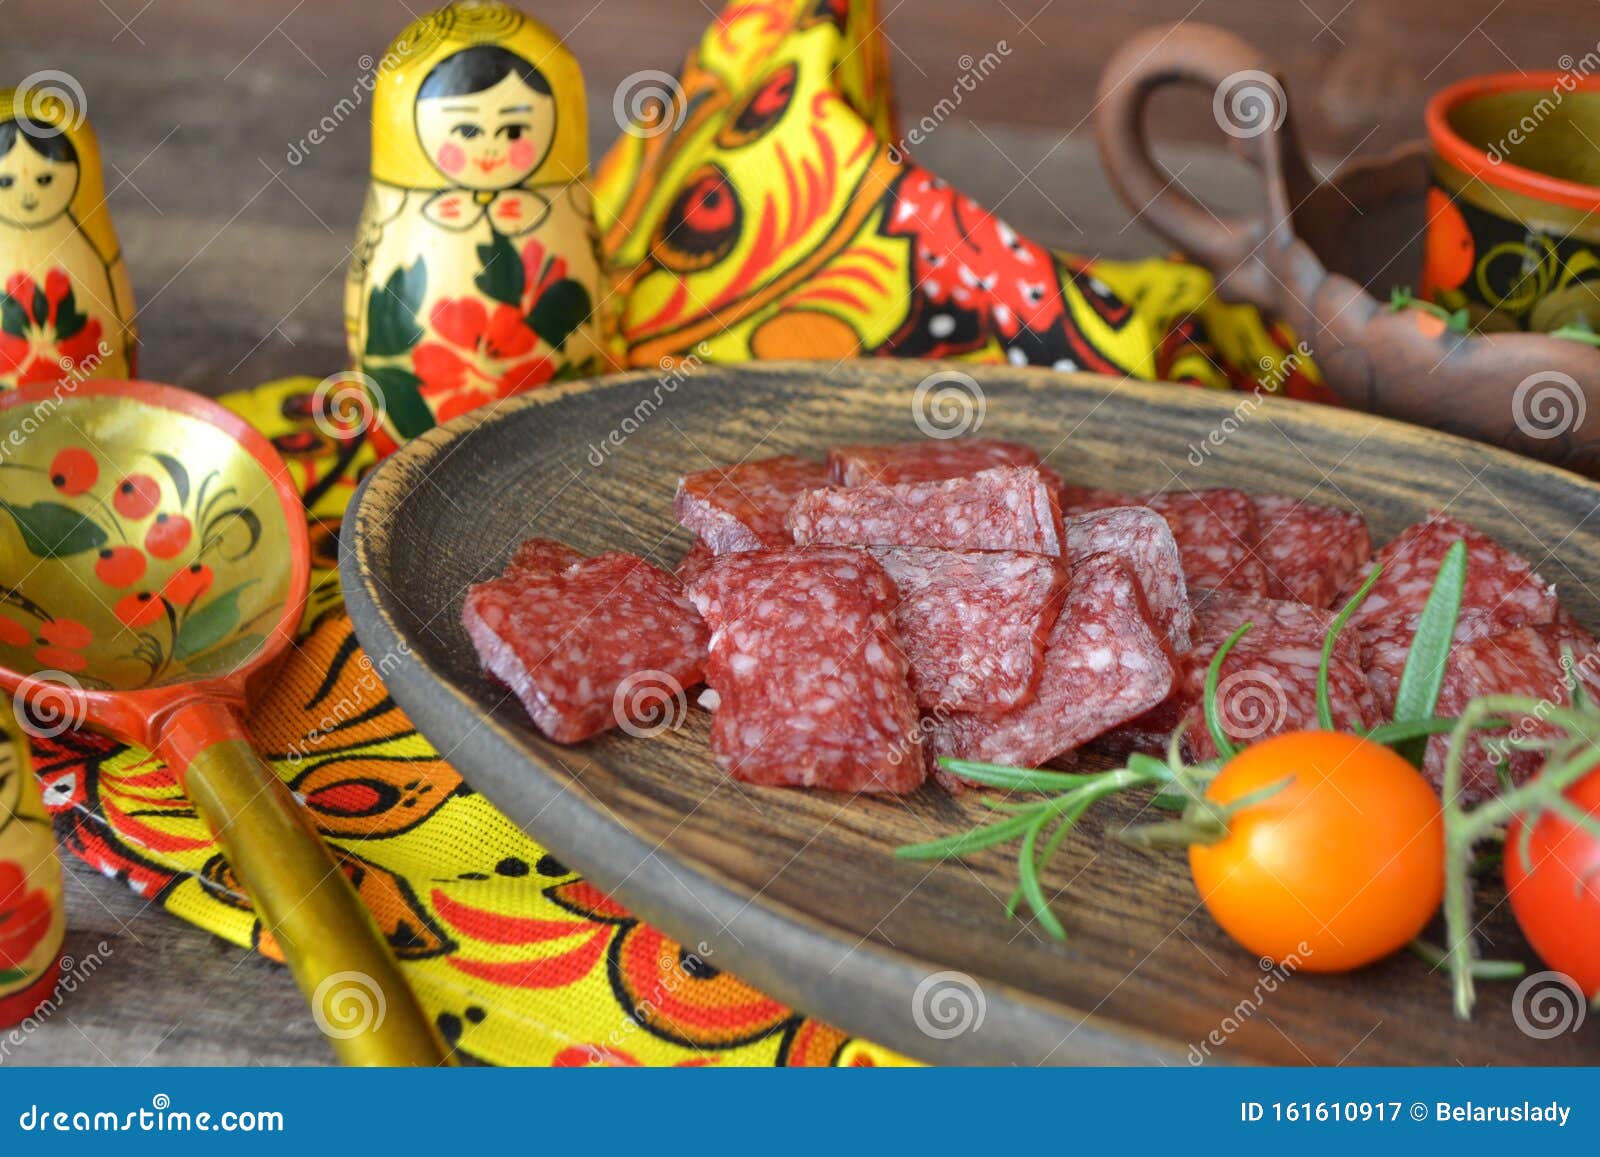 russian salami sausages sliced on rustic wooden plate, bright matroshka dolls, spoon khokhloma